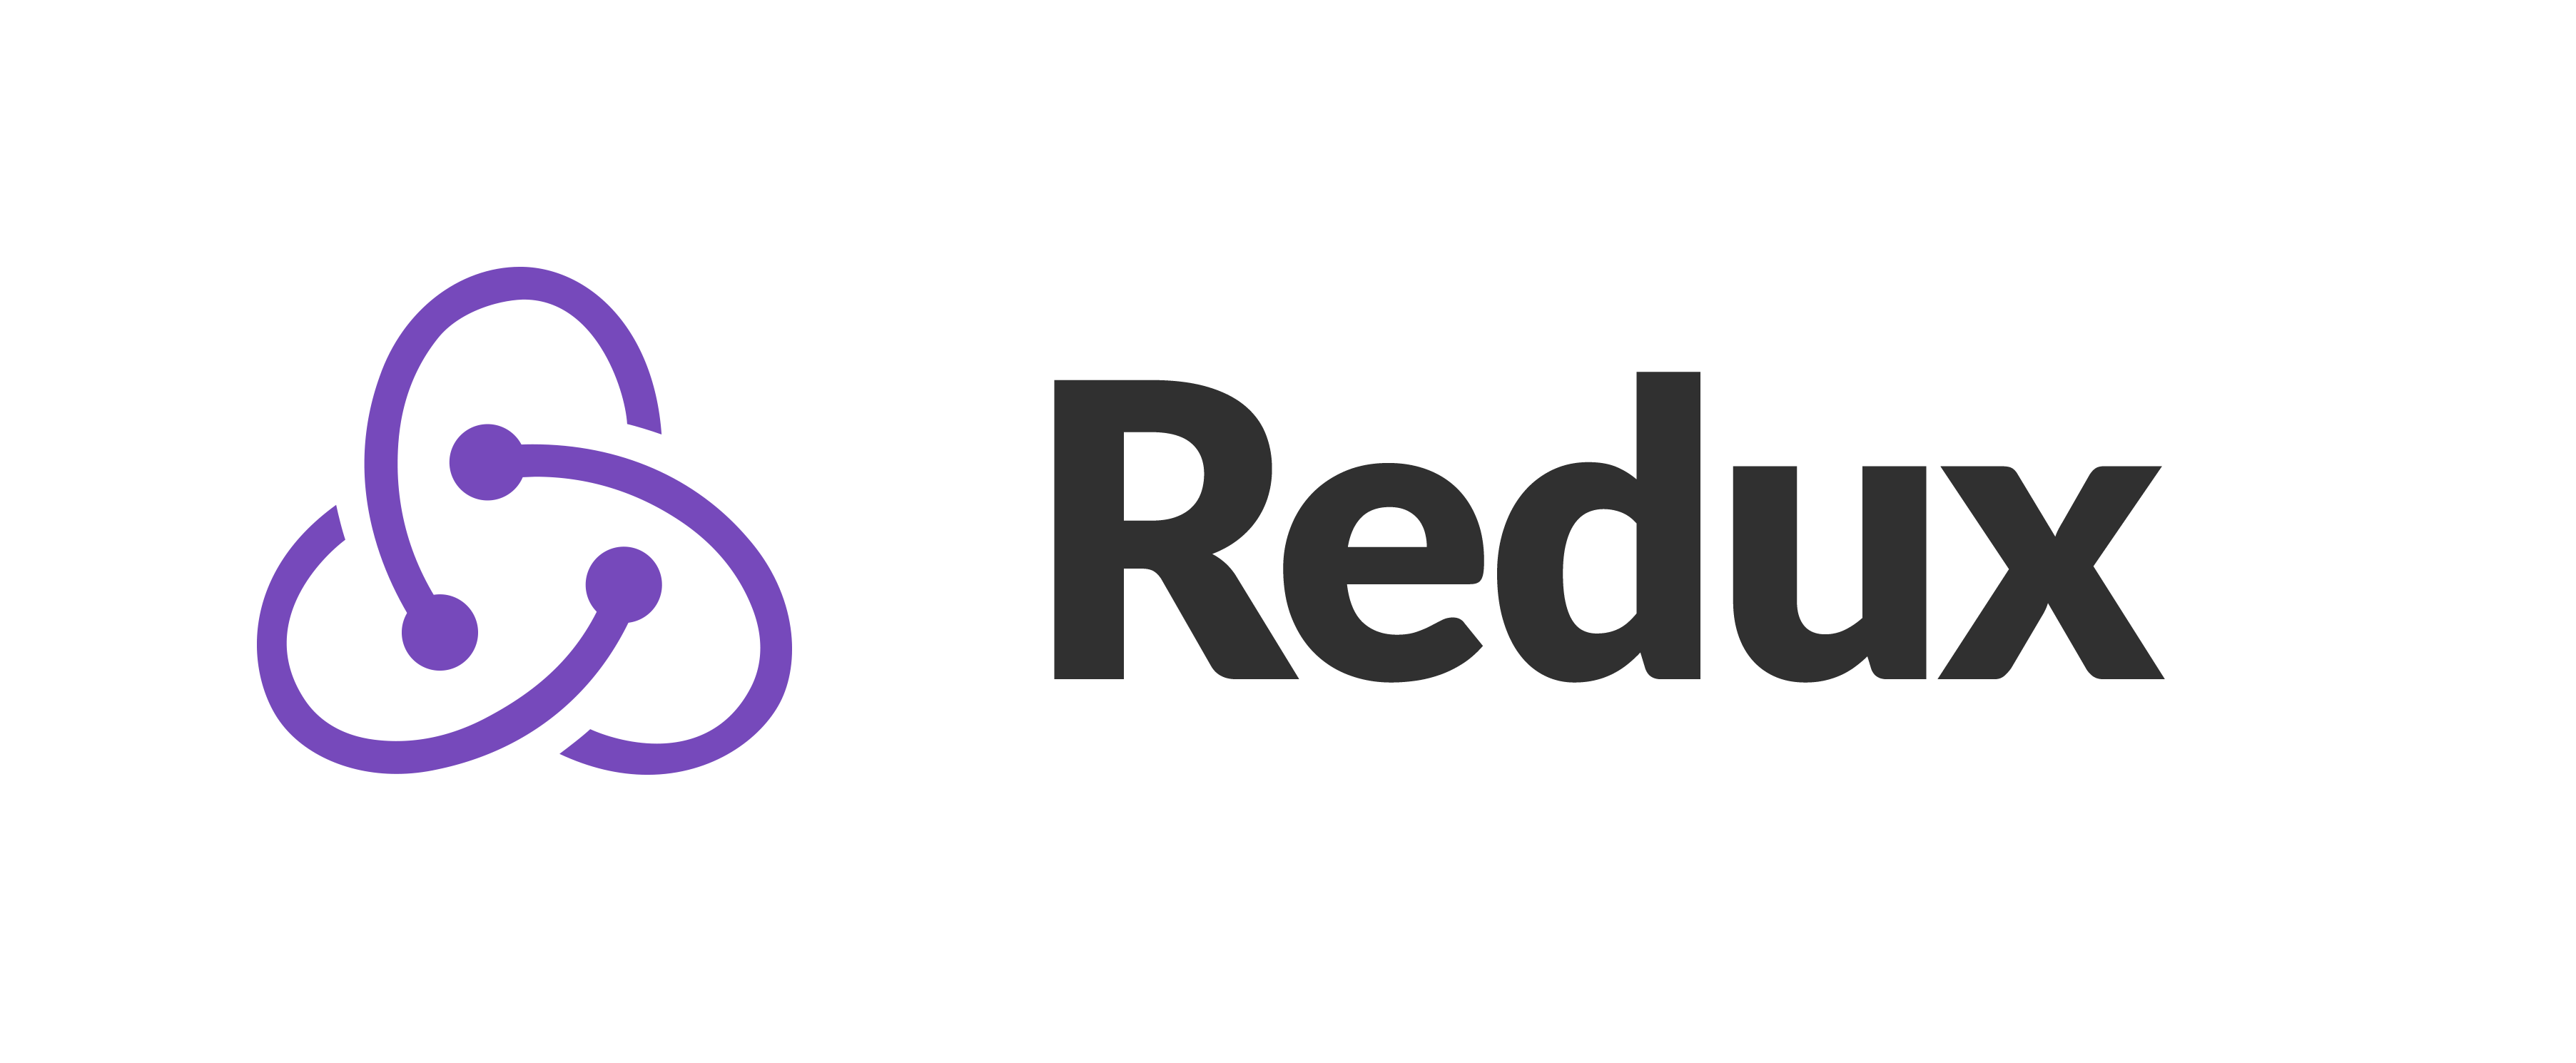 Understanding the relationship between react, redux and react-redux